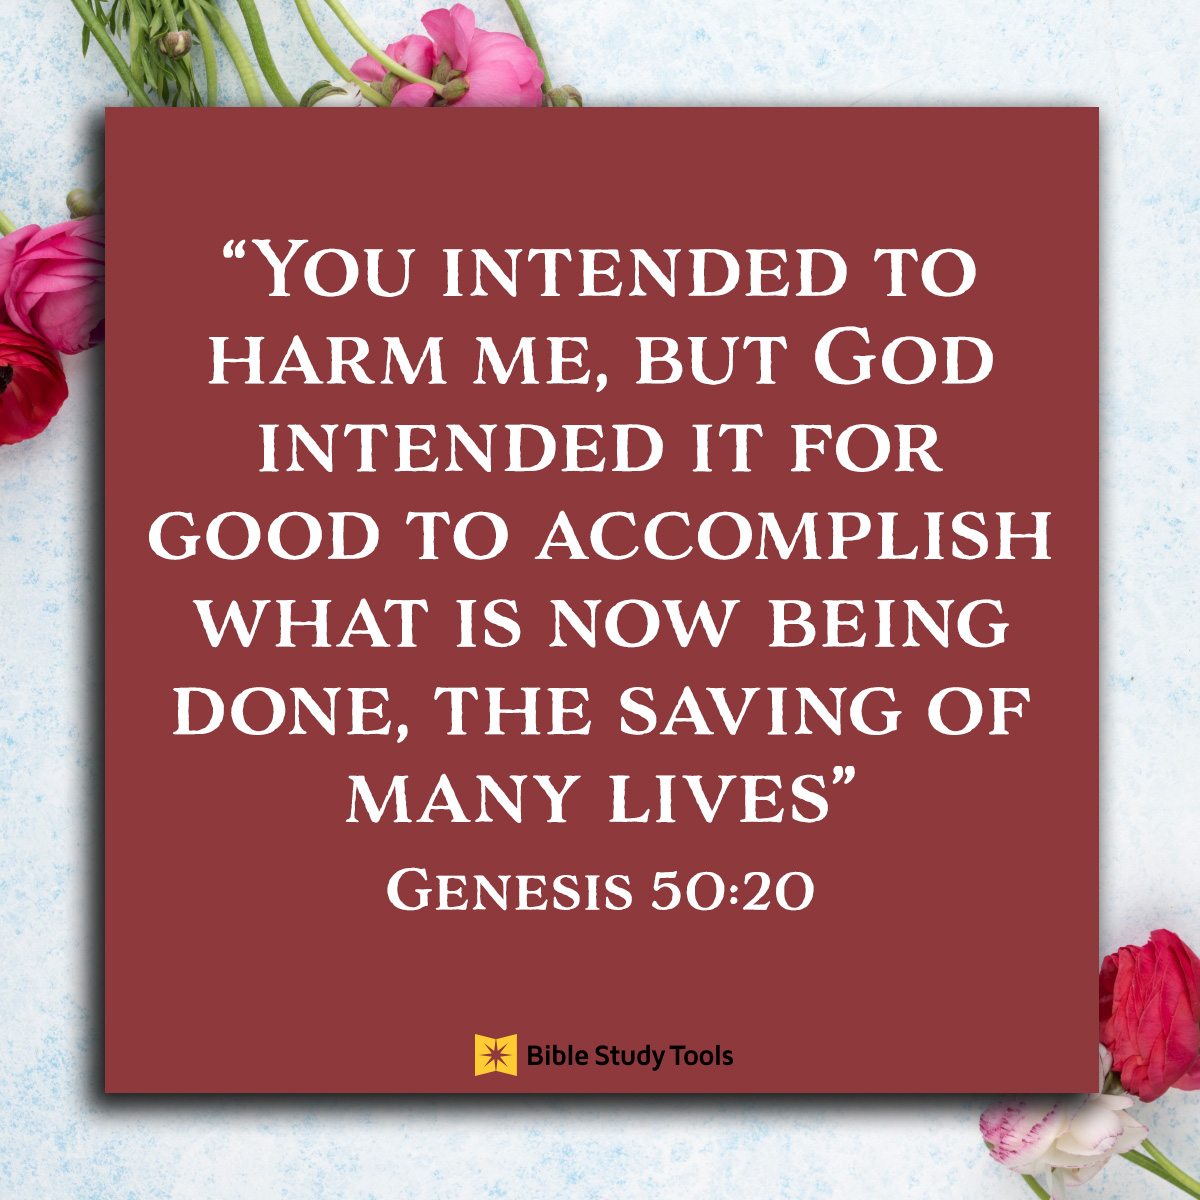 Genesis 50:20; inspirational image